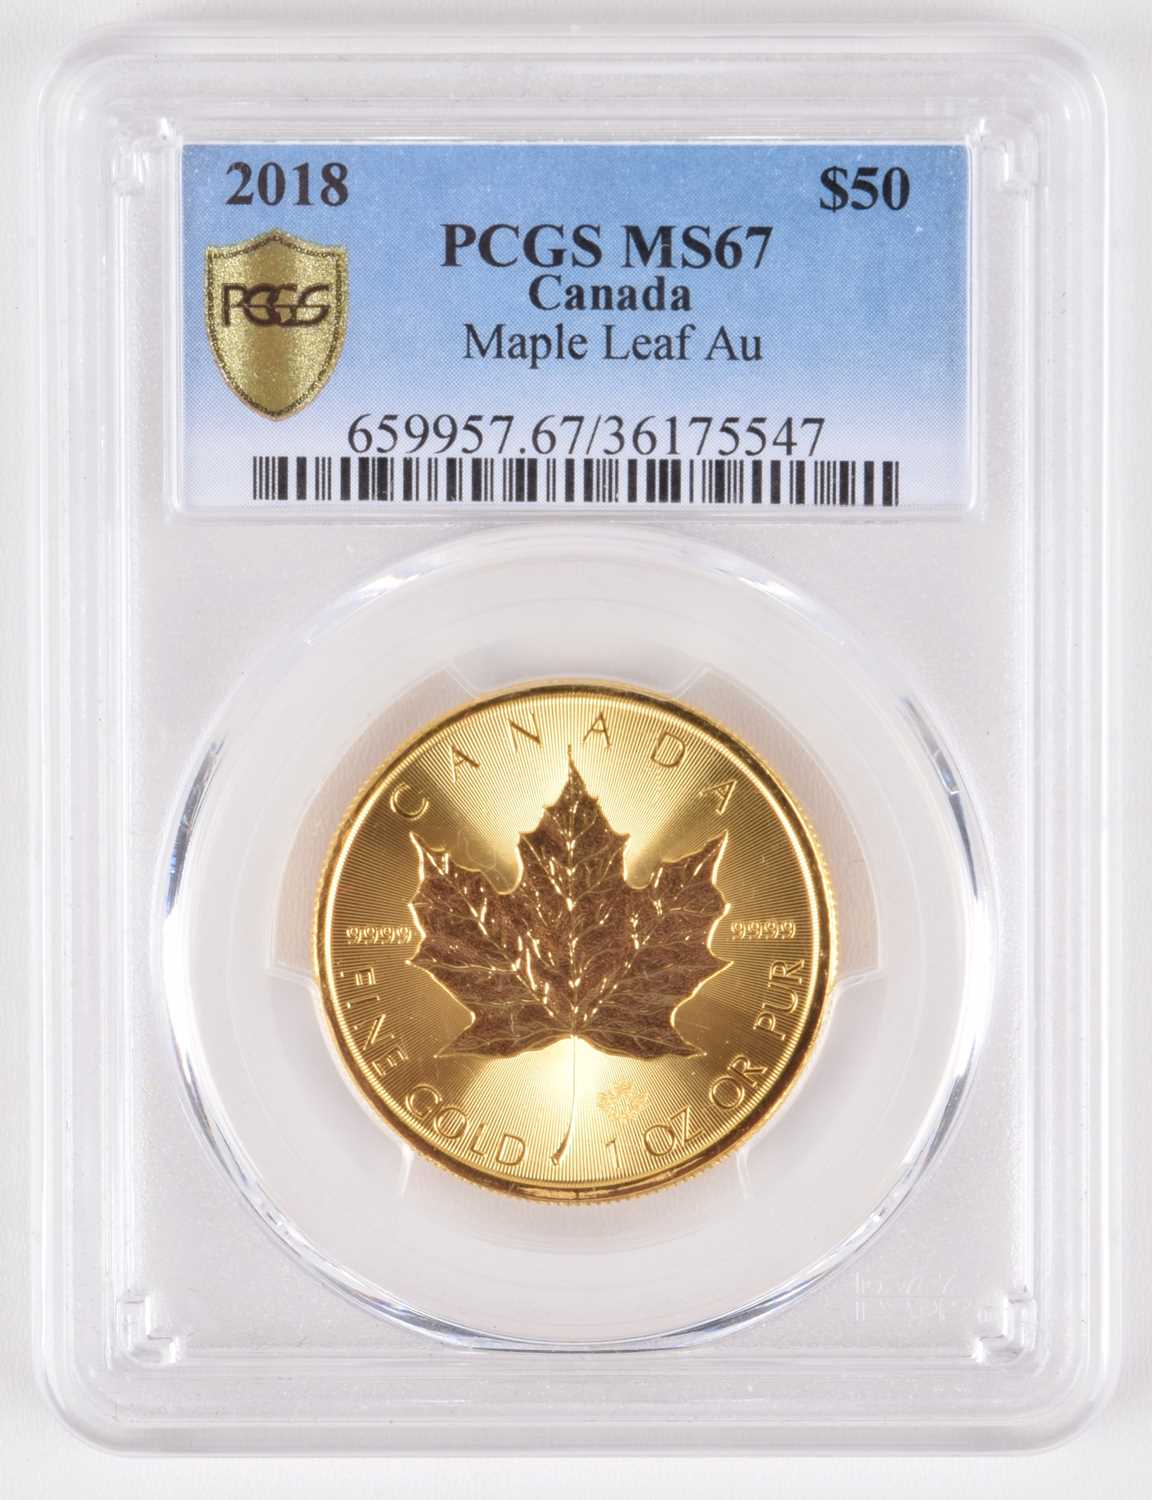 Lot 143 - Canada, Queen Elizabeth II, 50 Dollars, 2018, Maple Leaf, graded by PCGS as MS67.